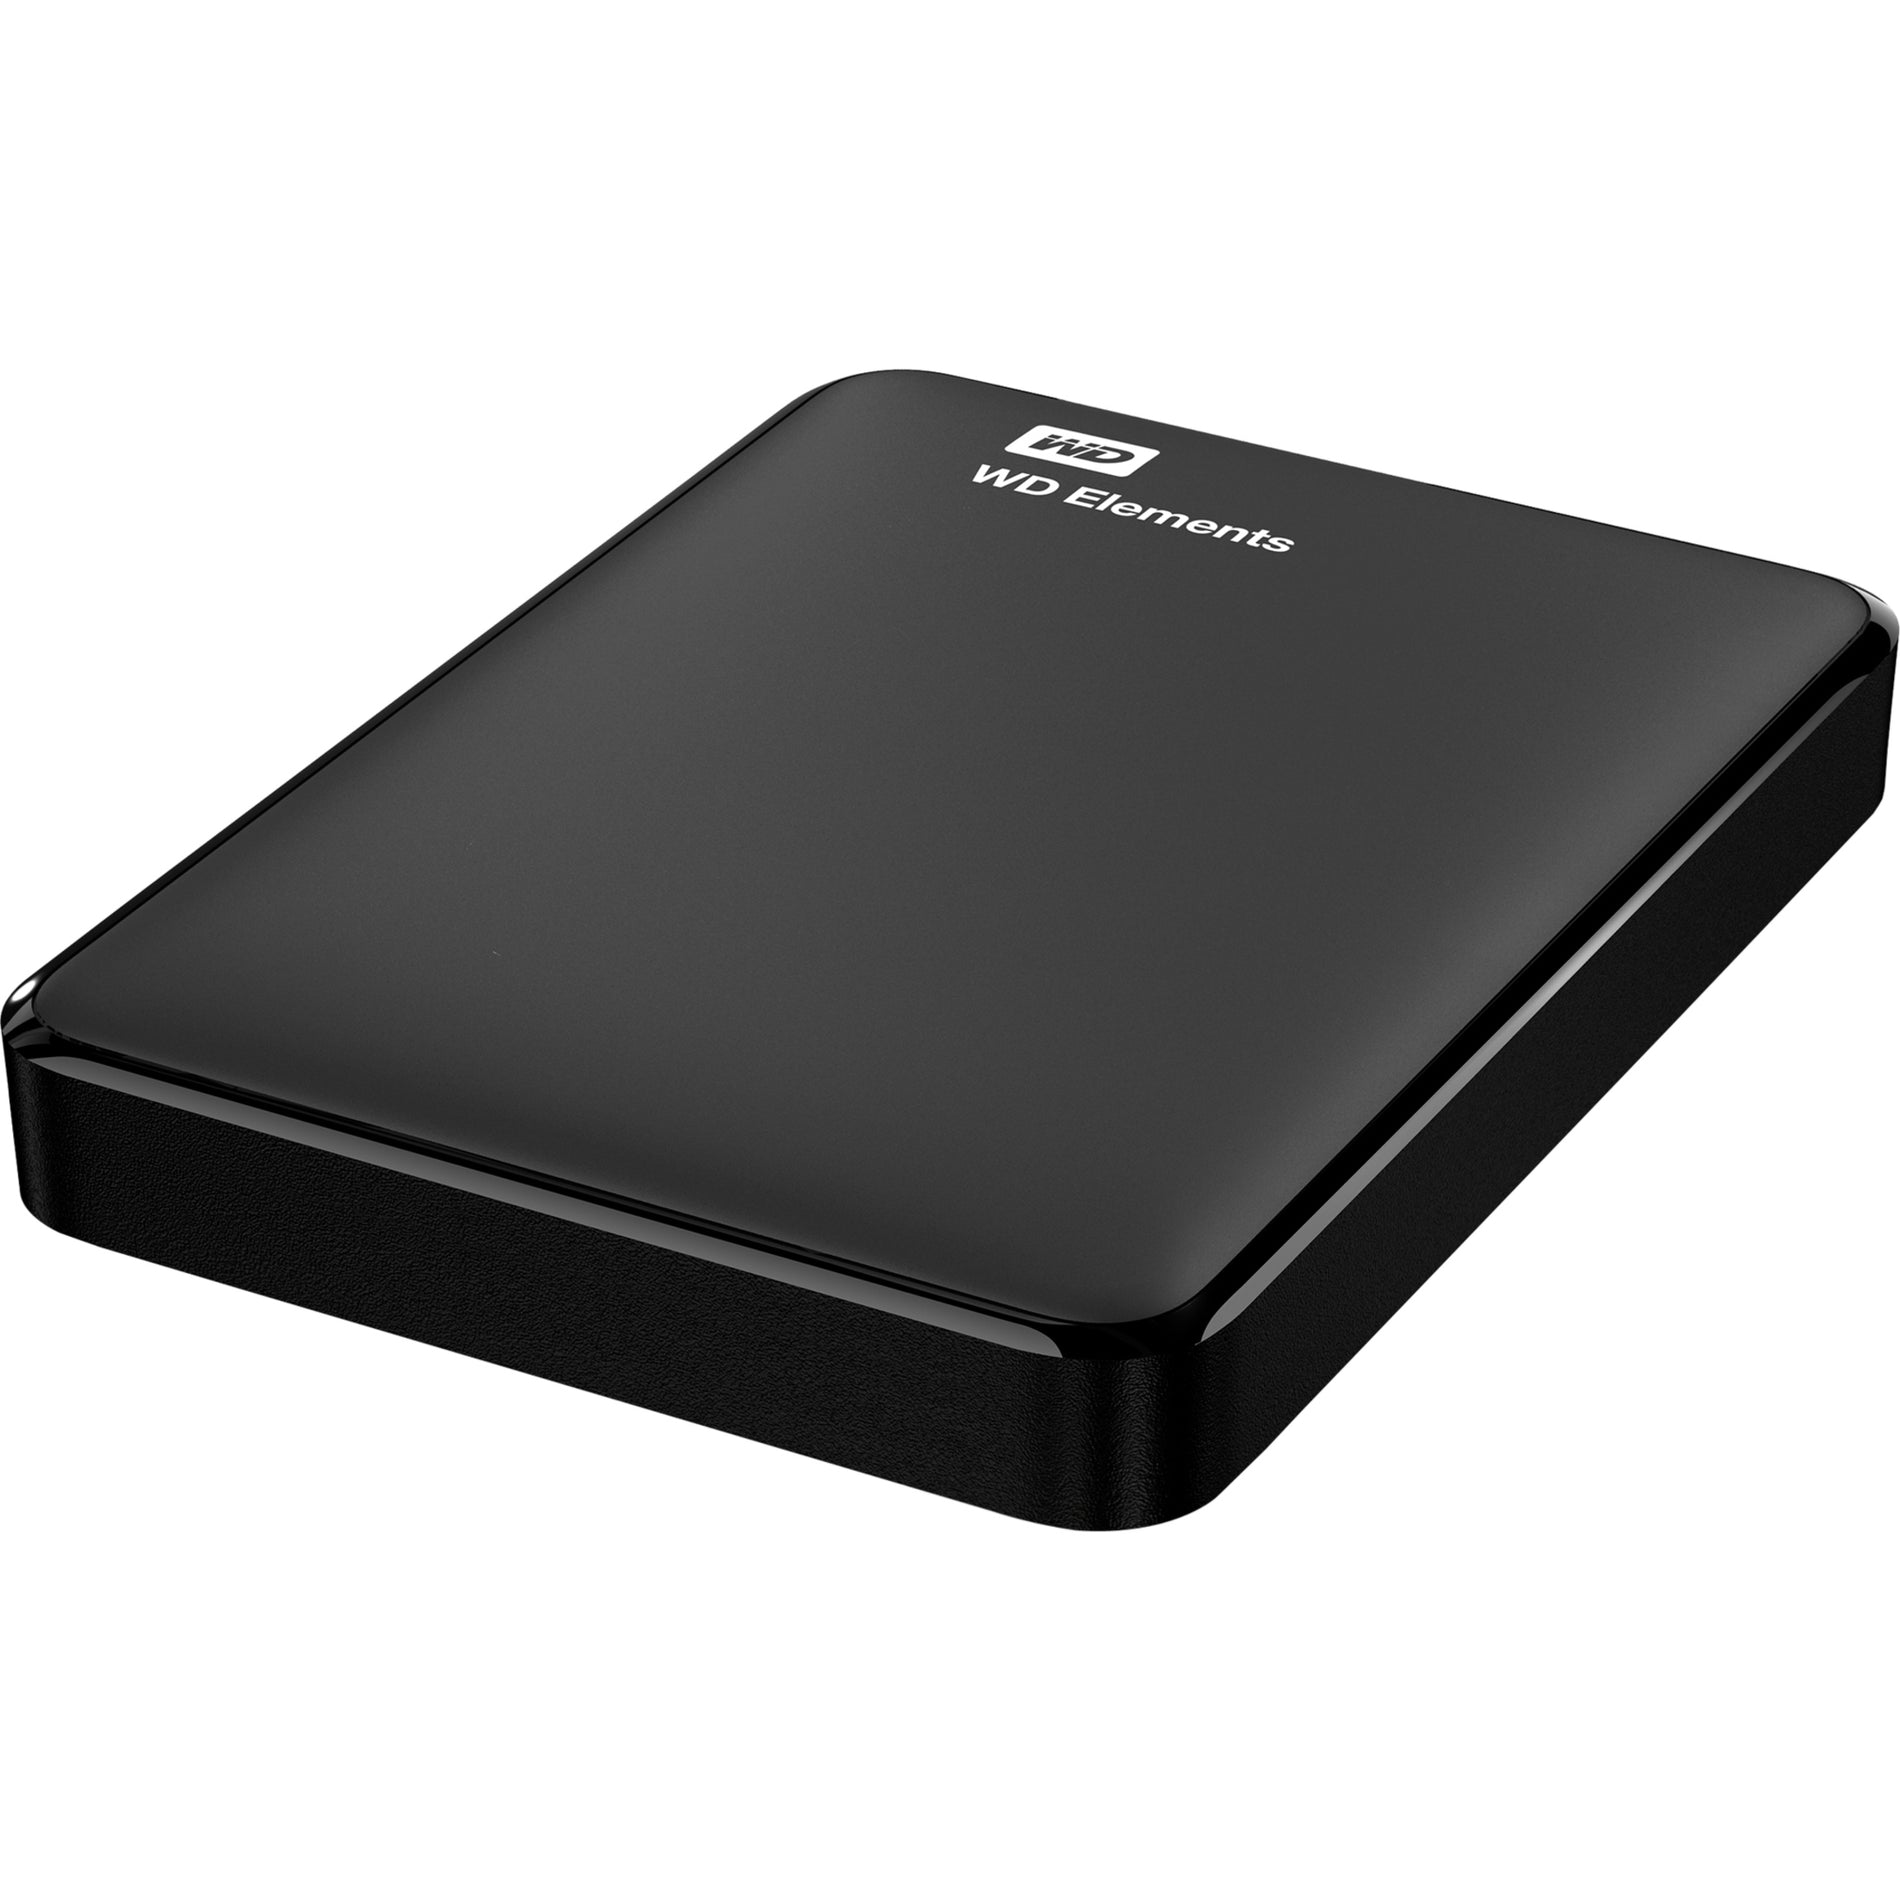 WD WDBU6Y0020BBK-WESN Elements USB 3.0 High-Capacity Portable Hard Drive For Windows